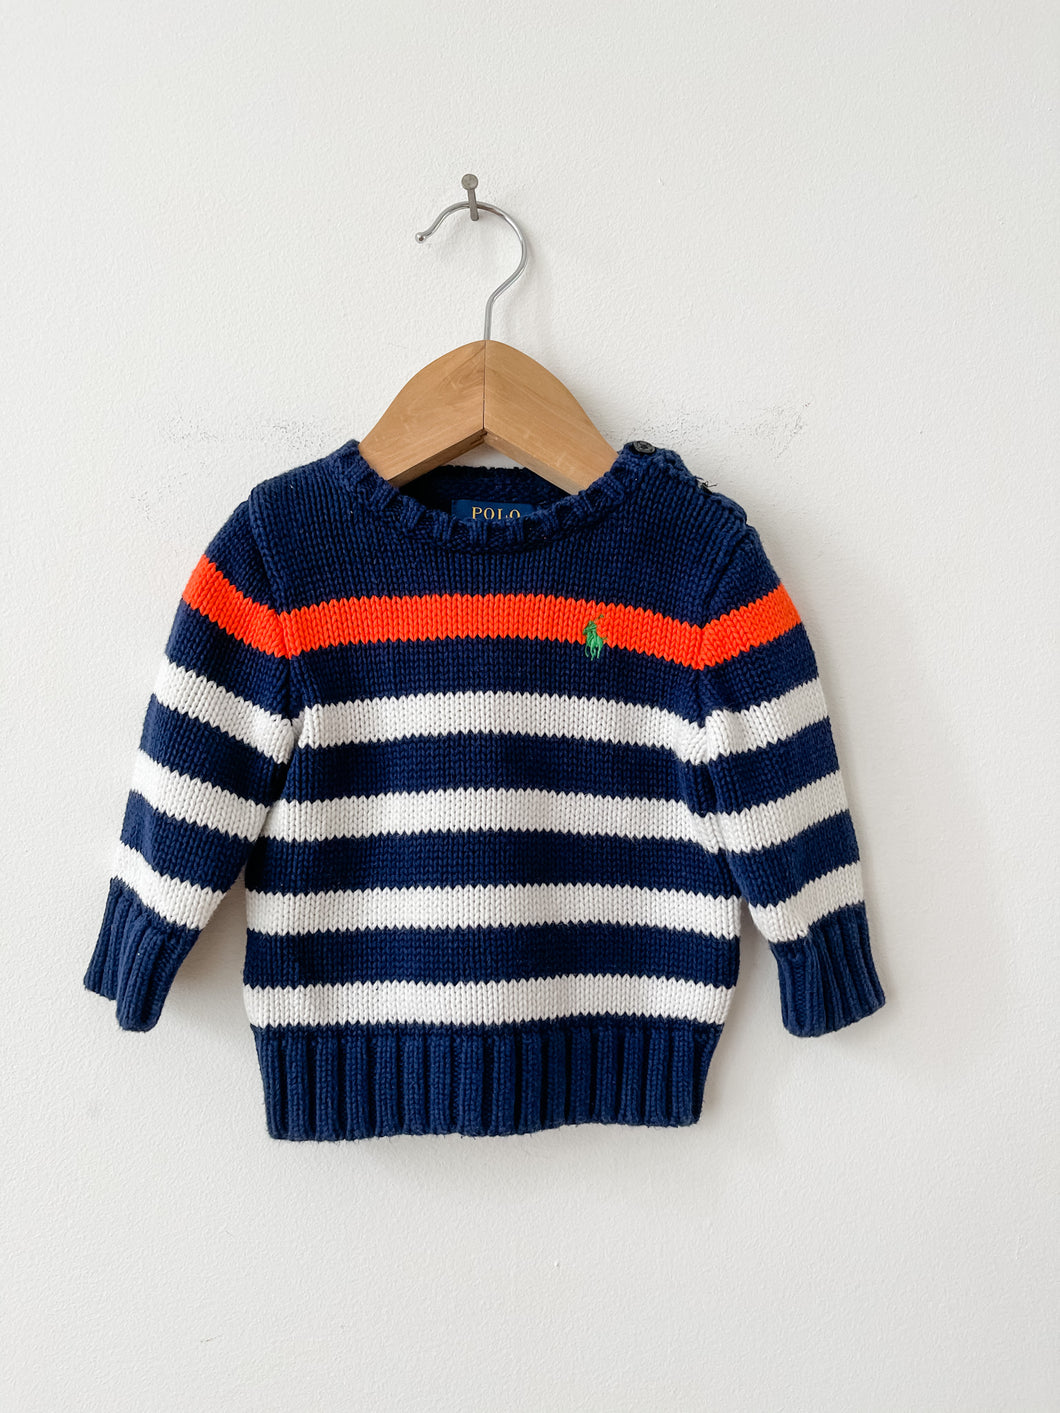 Boys Blue Polo Ralph Lauren Knit Sweater Size 9 Months